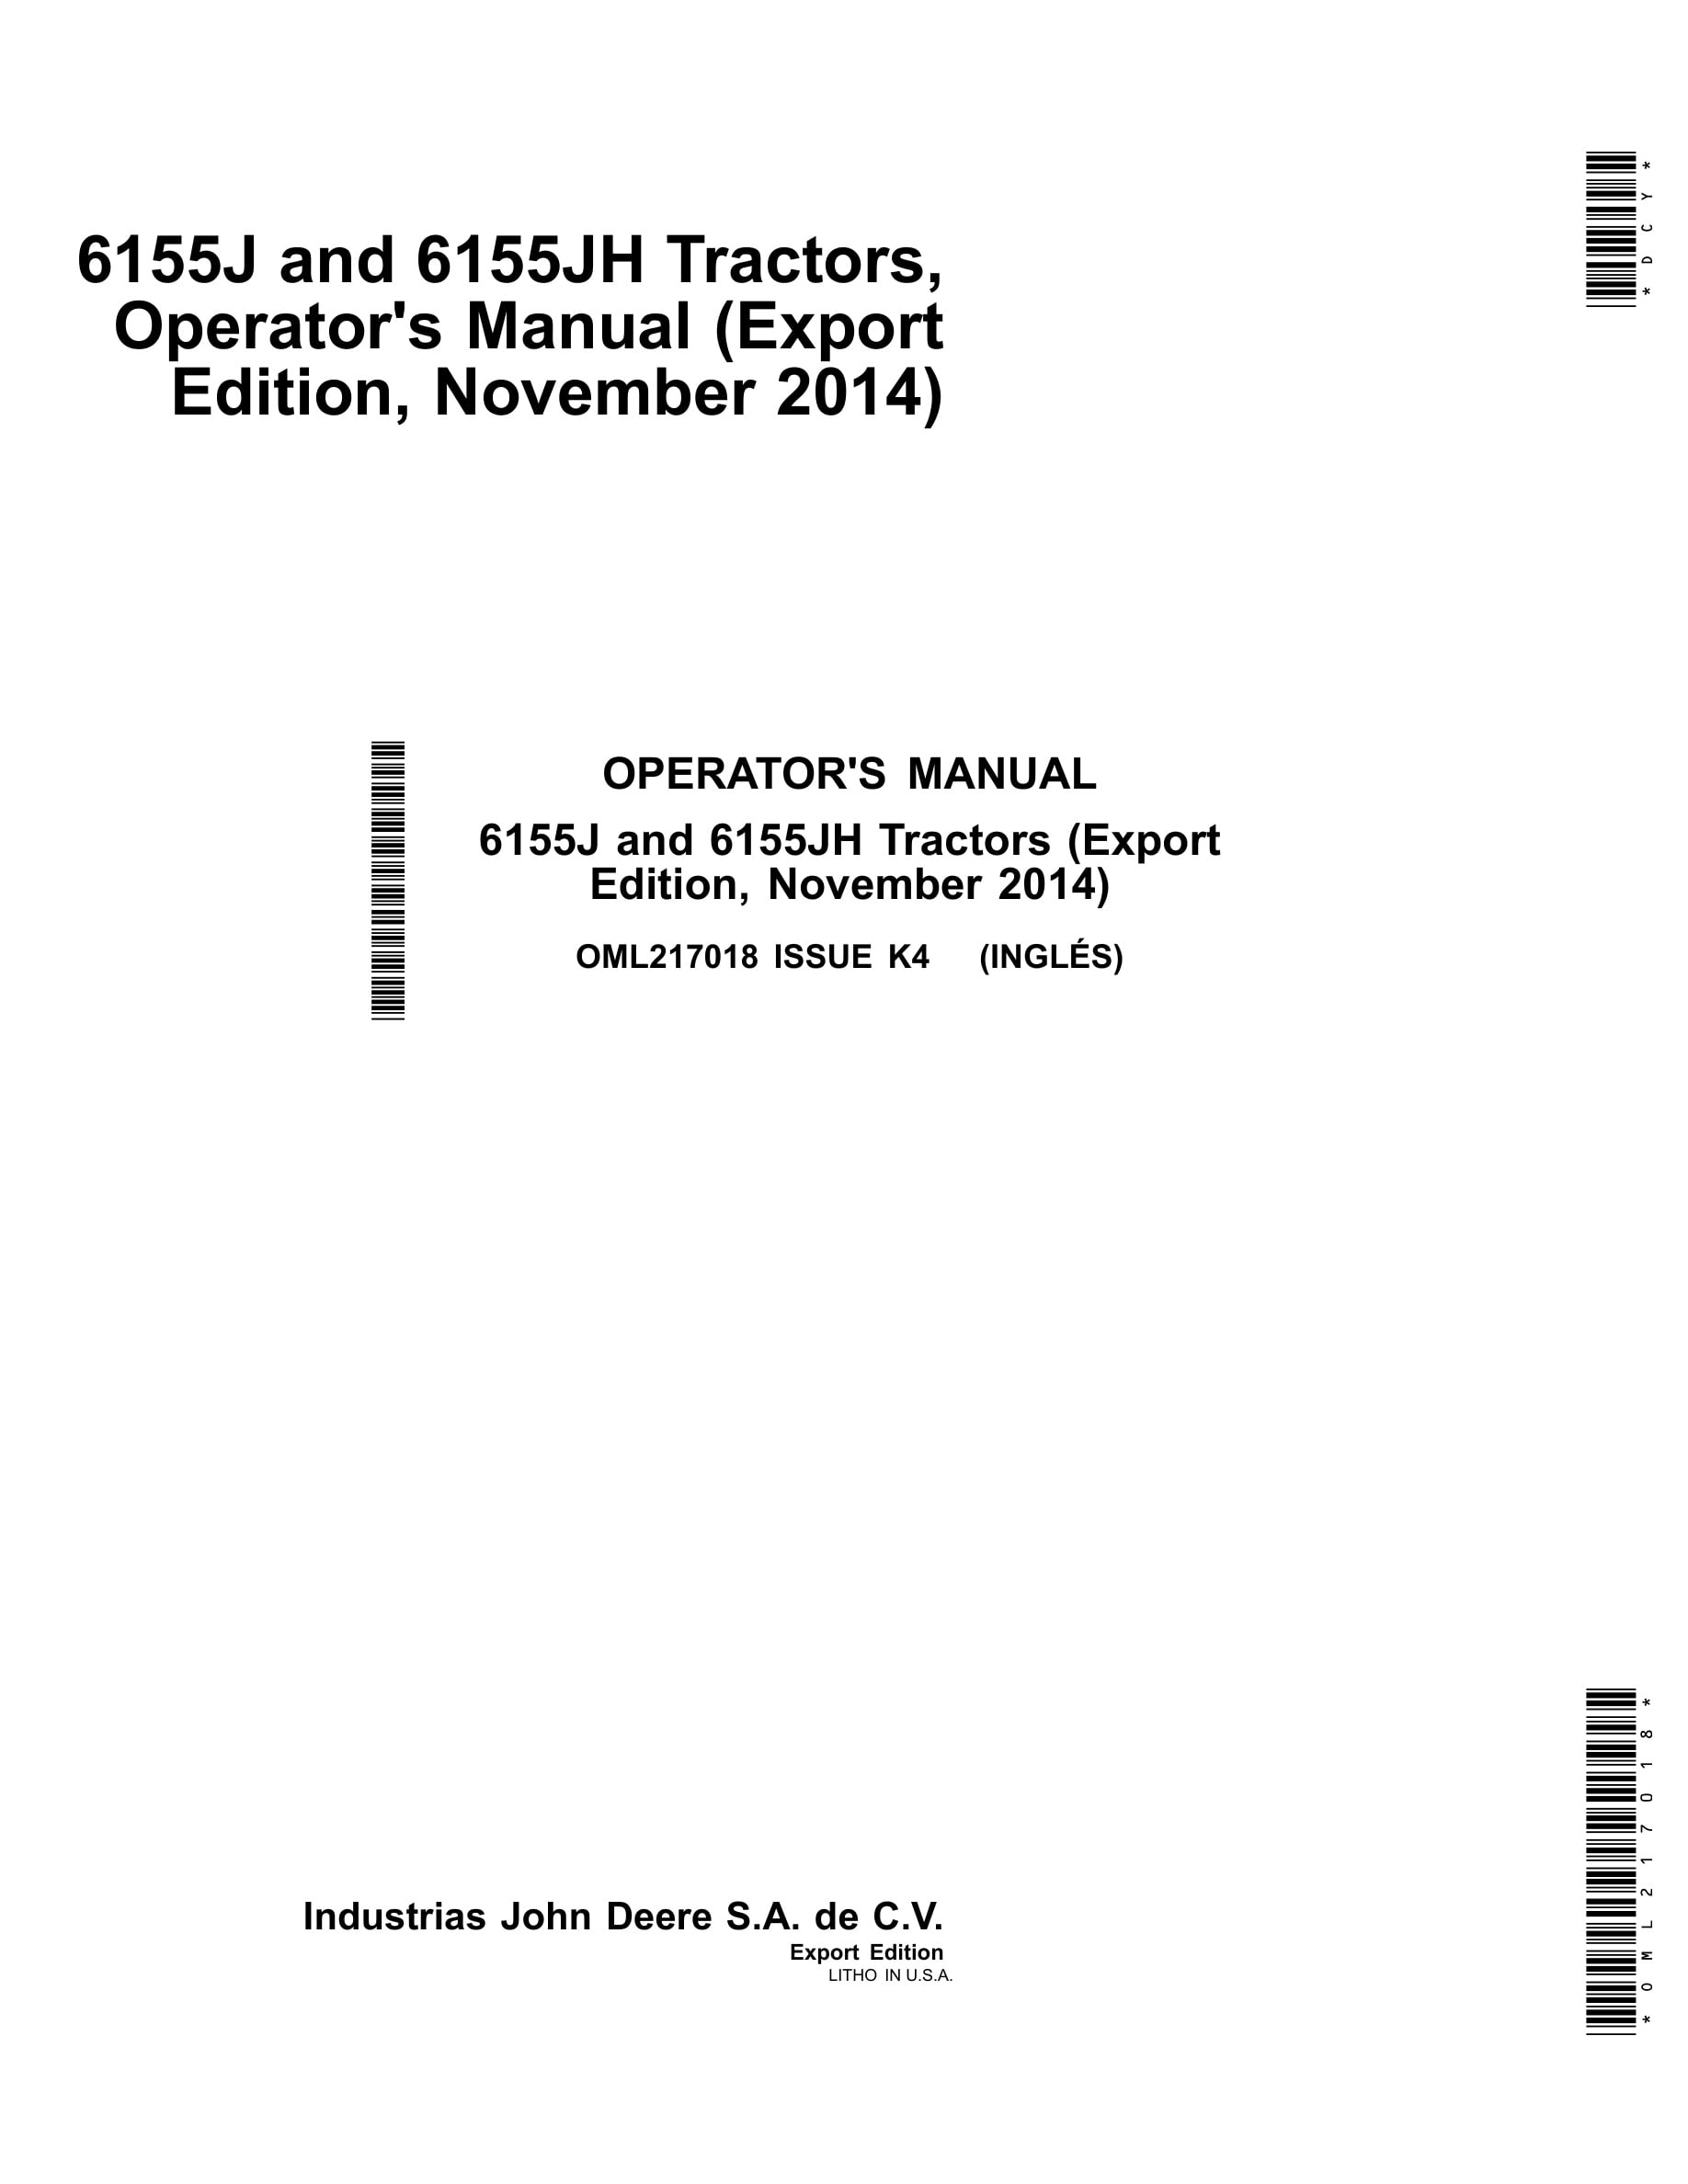 John Deere 6155j And 6155jh Tractors Operator Manuals OML217018-1